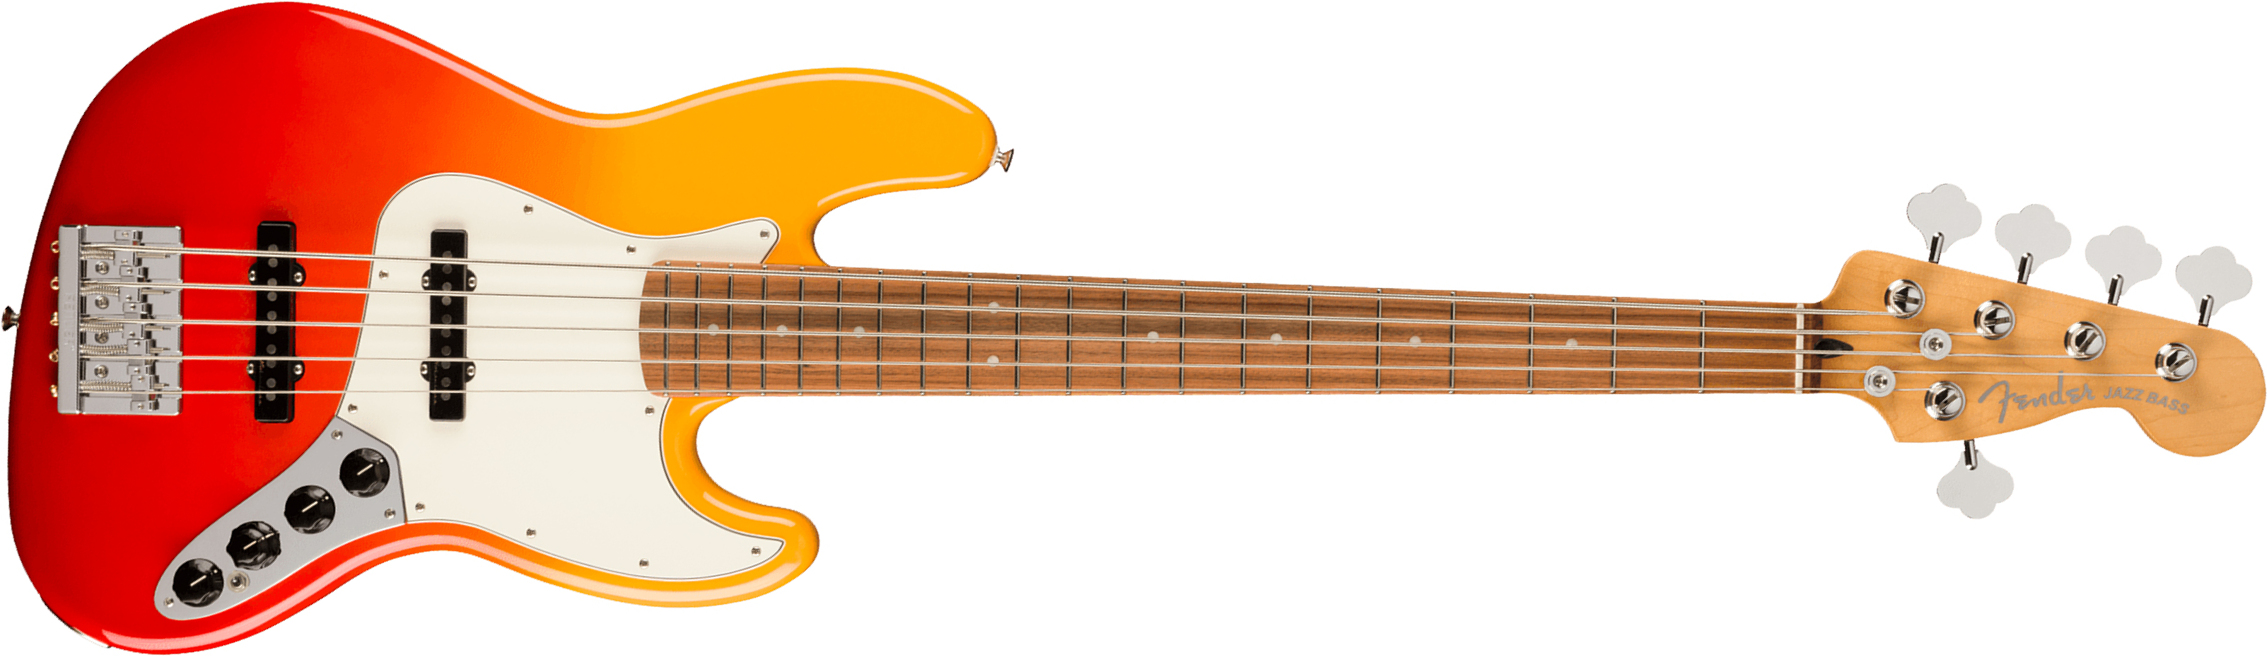 Fender Jazz Bass Player Plus V Mex 5c Active Pf - Tequila Sunrise - Basse Électrique Solid Body - Main picture